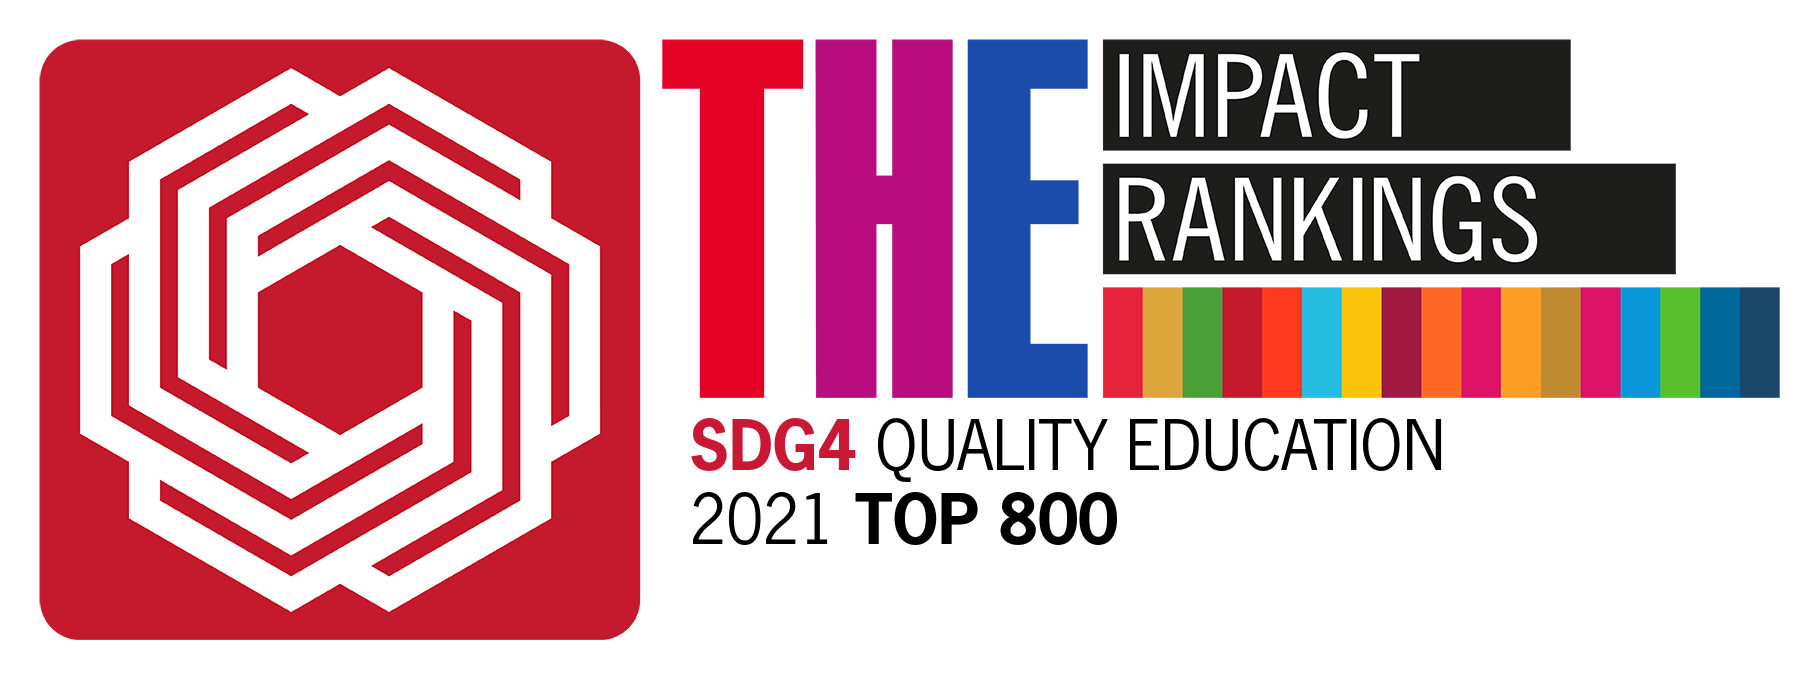 SDG4_ Quality Education - Top 800